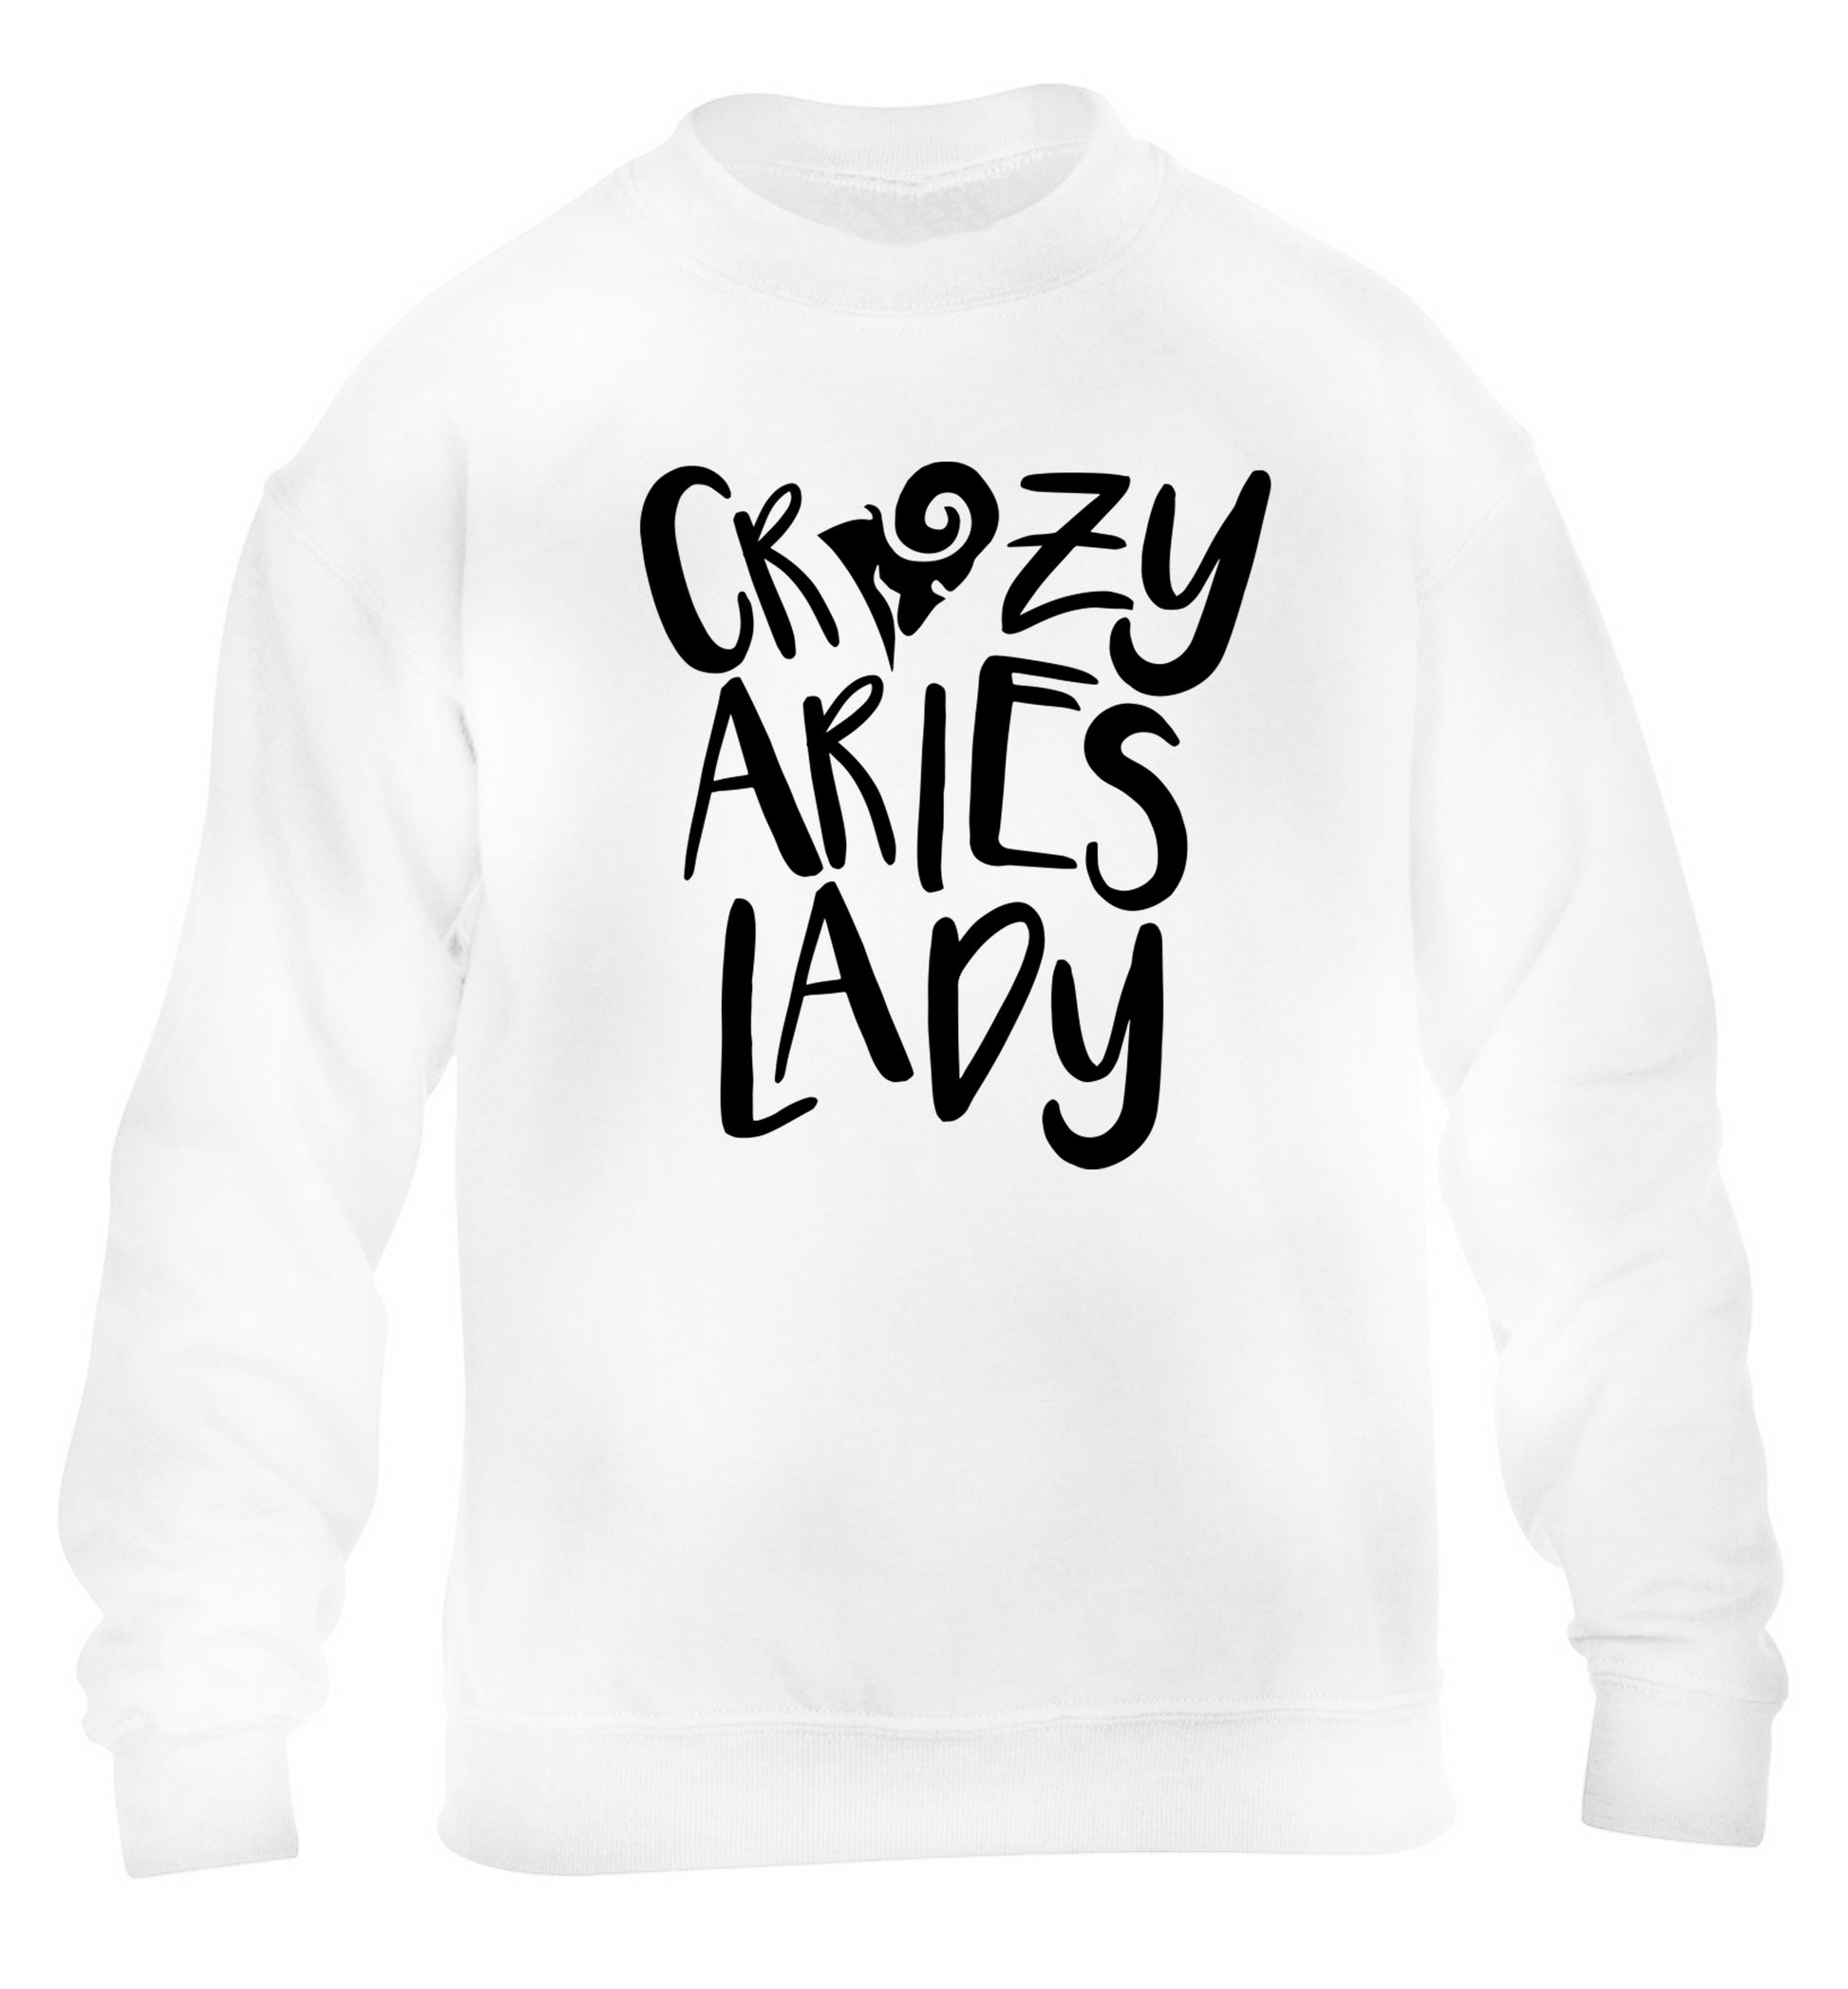 Crazy aries lady children's white sweater 12-13 Years